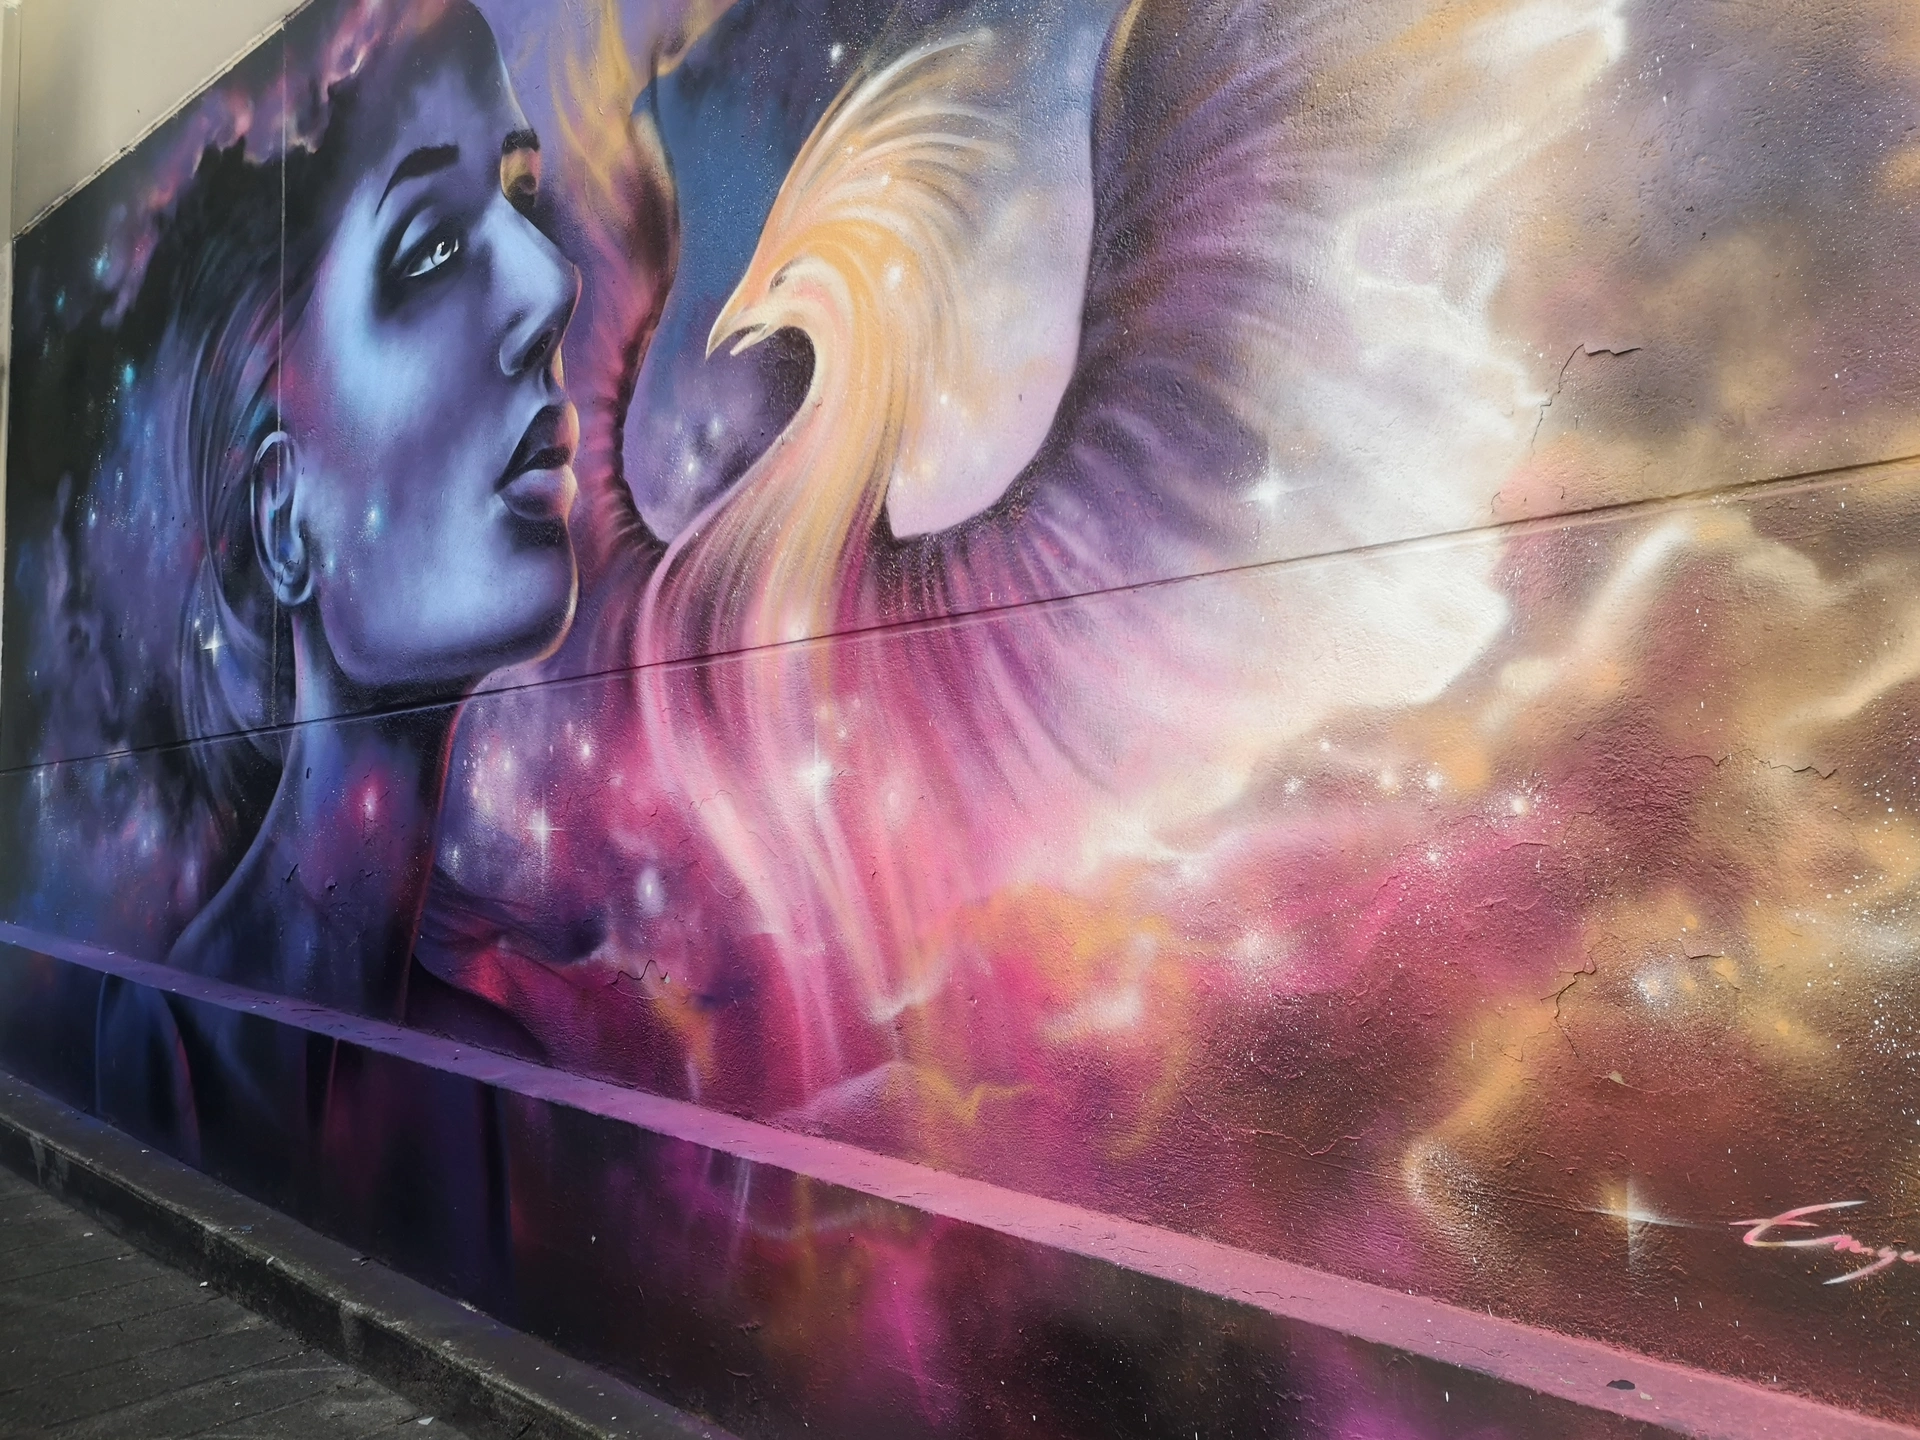 Oeuvre de Street Art à Paris